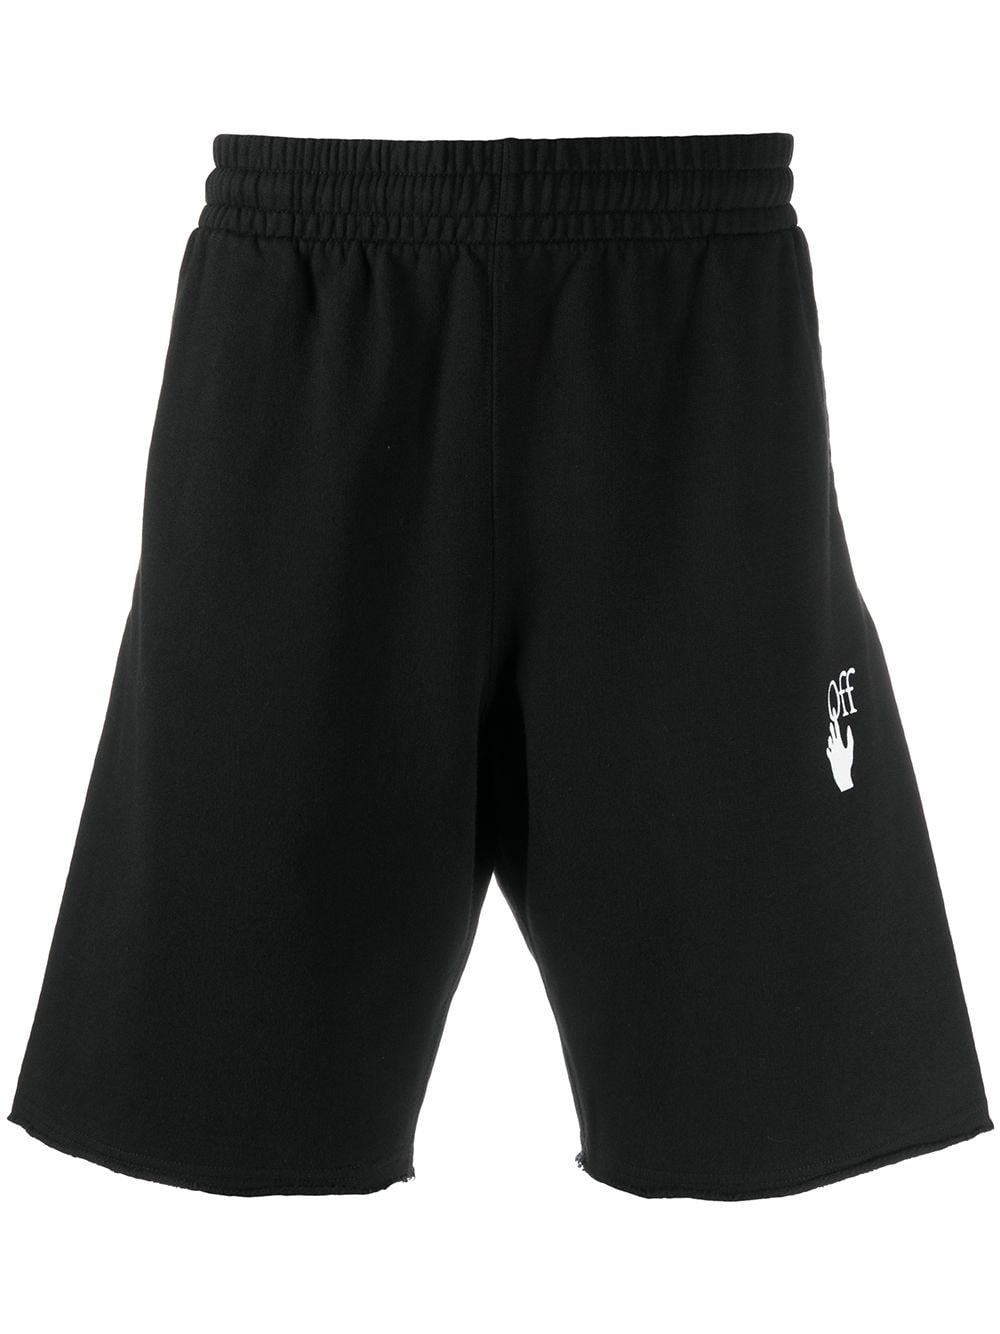 Off-White Diag Stripe Sweat Shorts